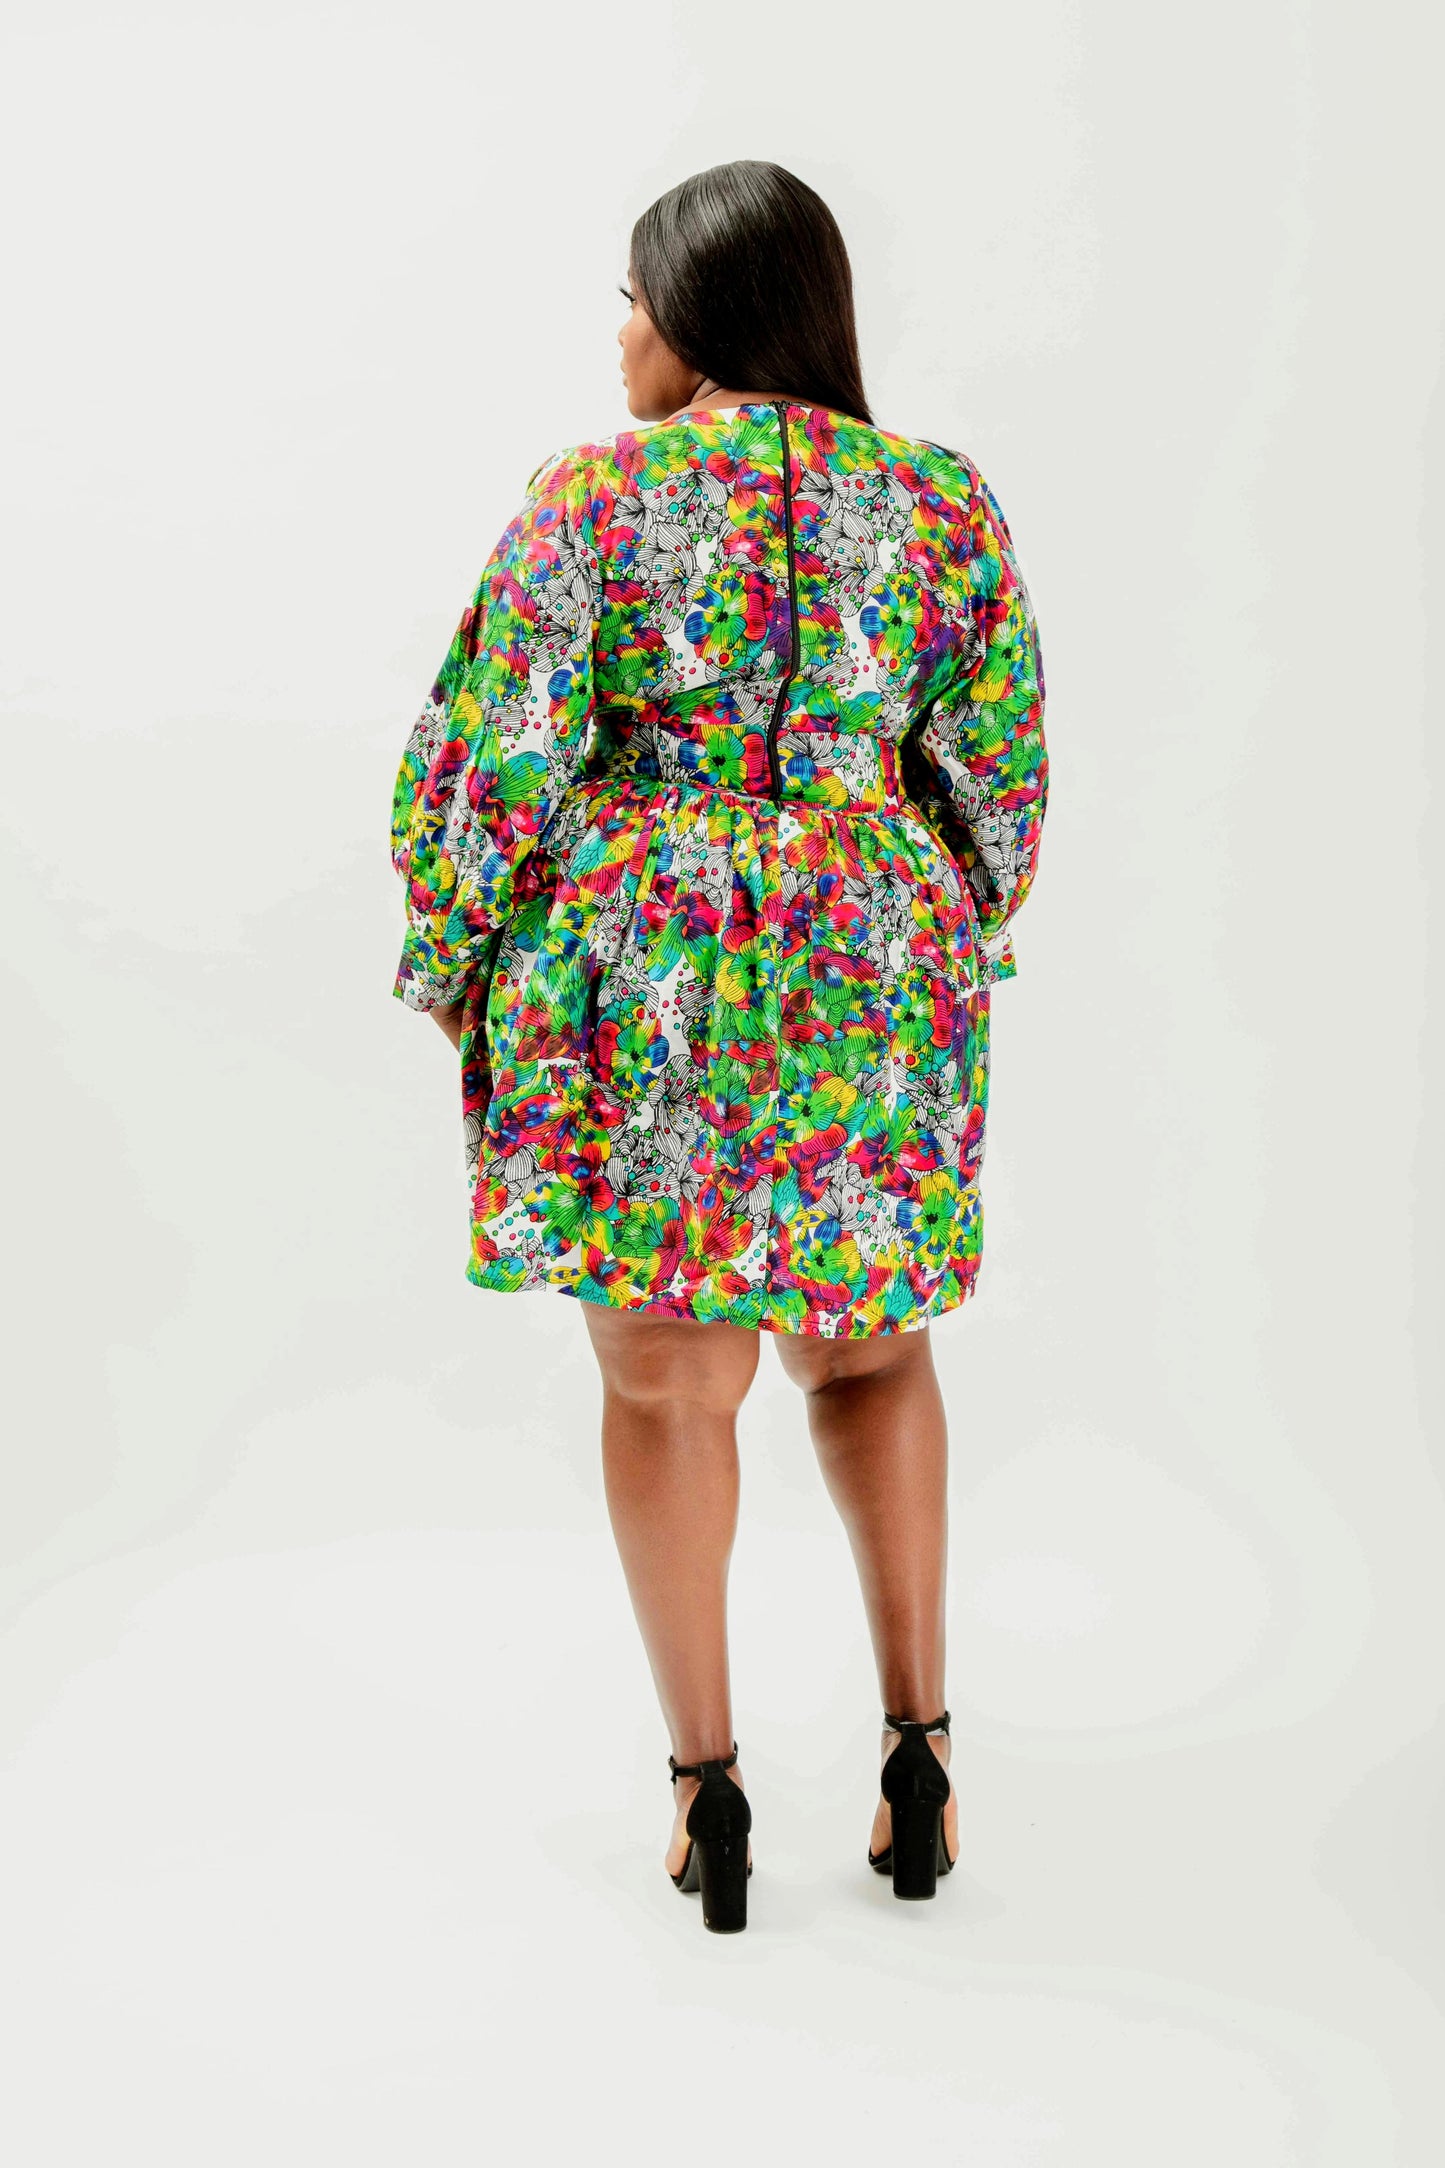 Mbira - African Print Corset Dress